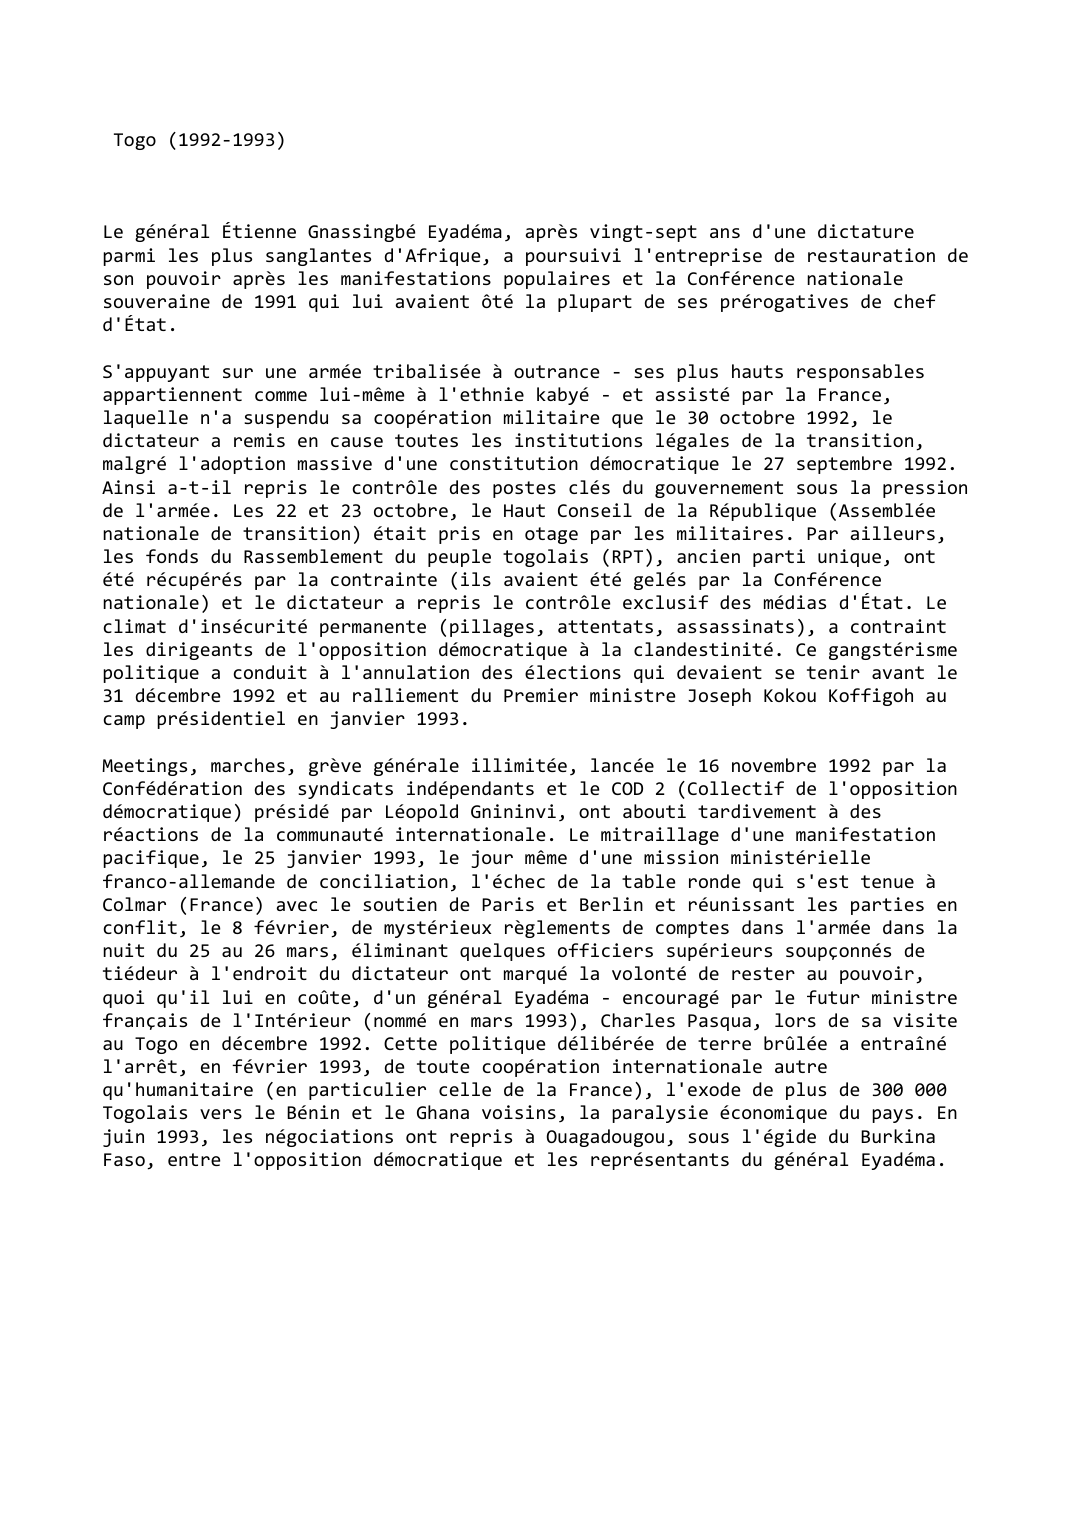 Prévisualisation du document Togo (1992-1993)